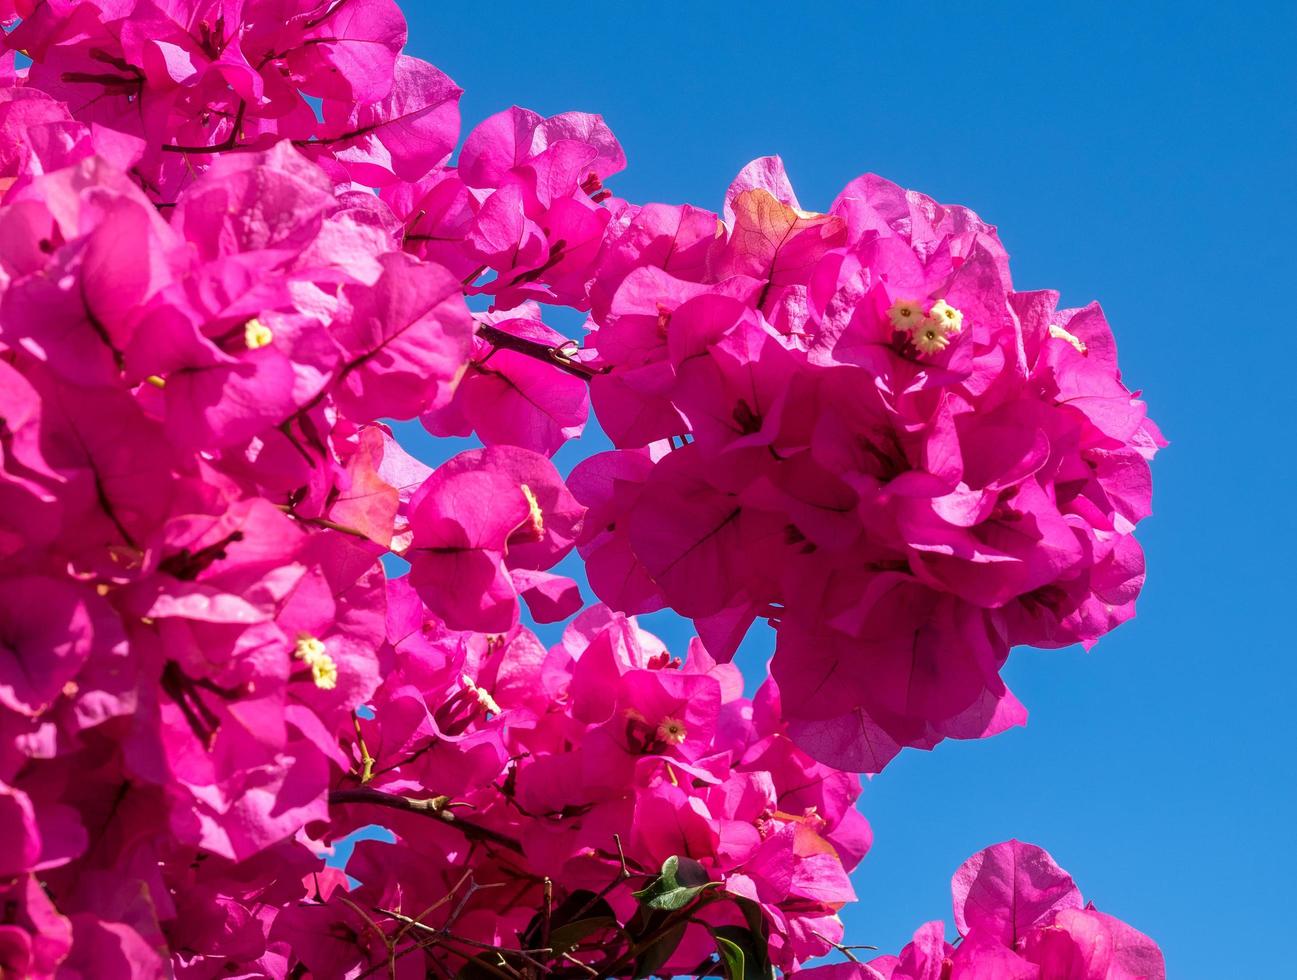 buganvílias rosa vibrantes florescendo profusamente em marbella foto